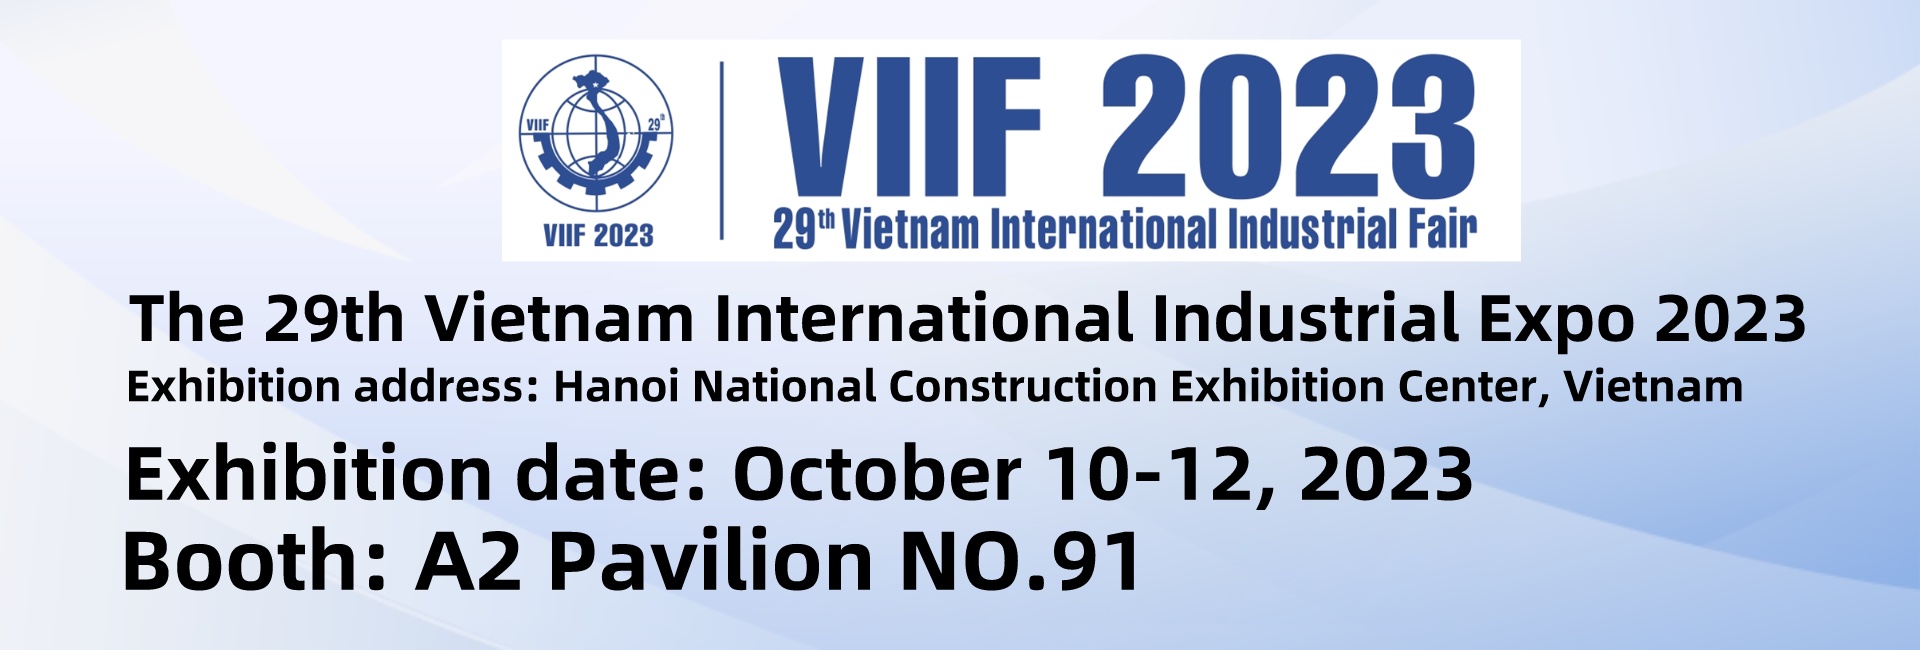 The 29th Vietnam International Industrial Expo 2023